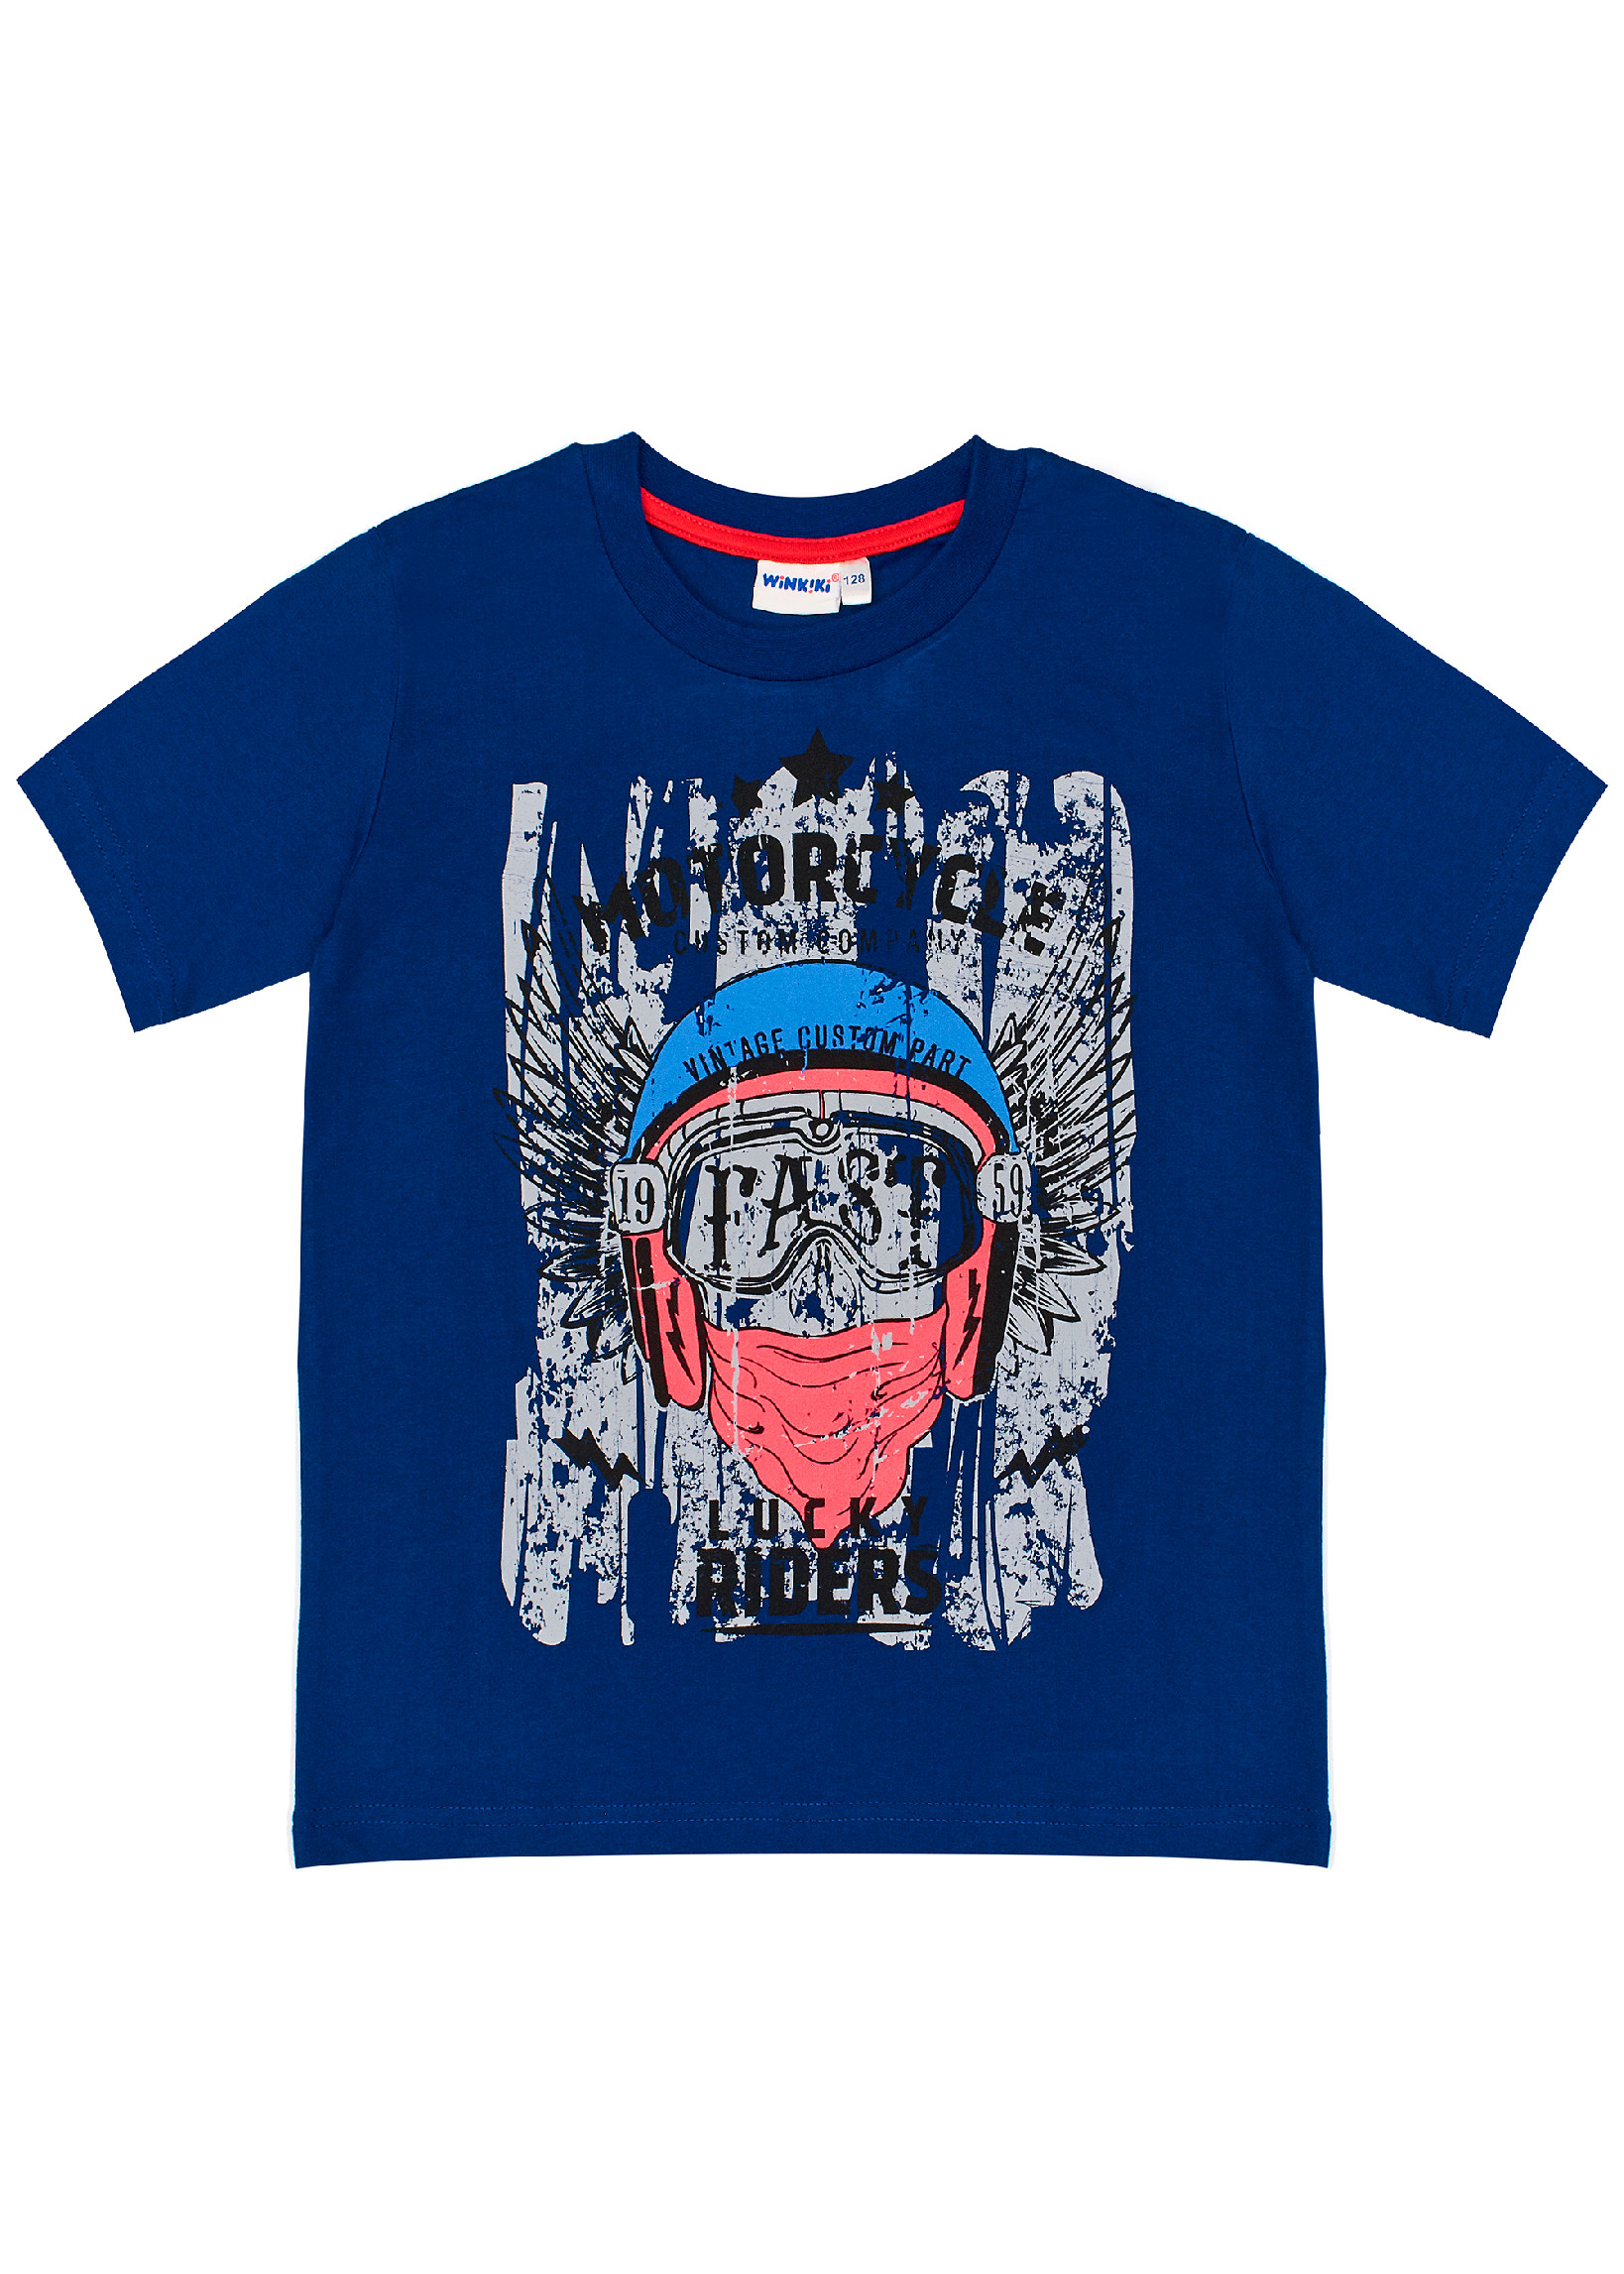 Chlapecké triko - Winkiki WJB 91380, tmavě modrá Barva: Modrá, Velikost: 152